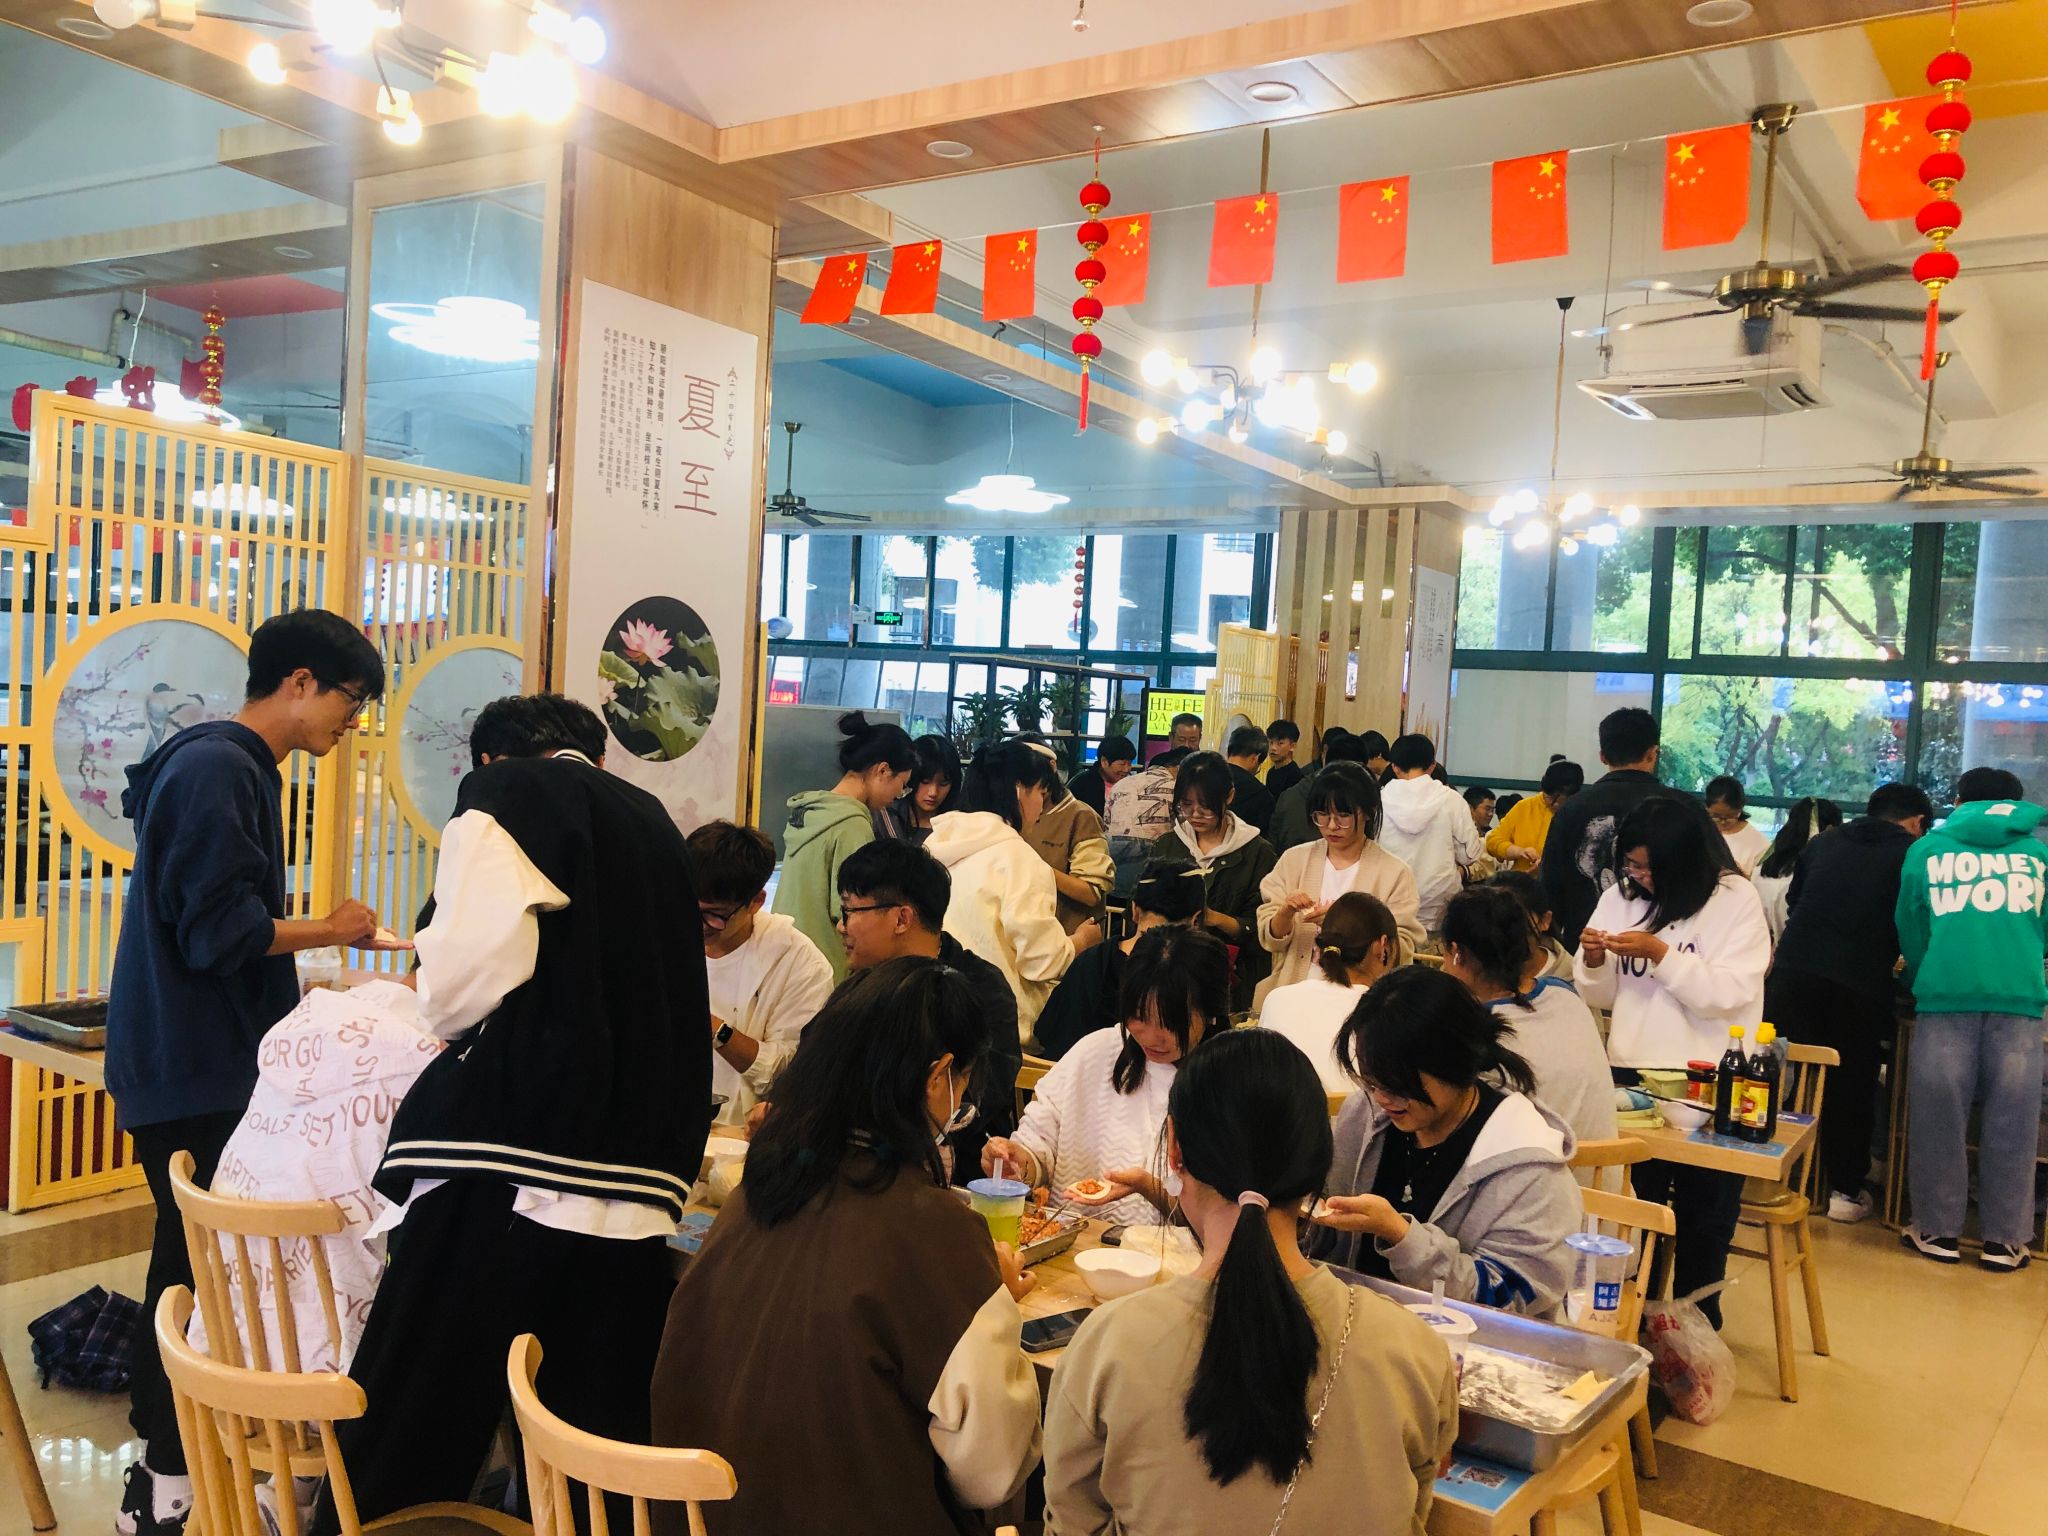 bat365中文官方网站学生进行自己动手包饺子活动